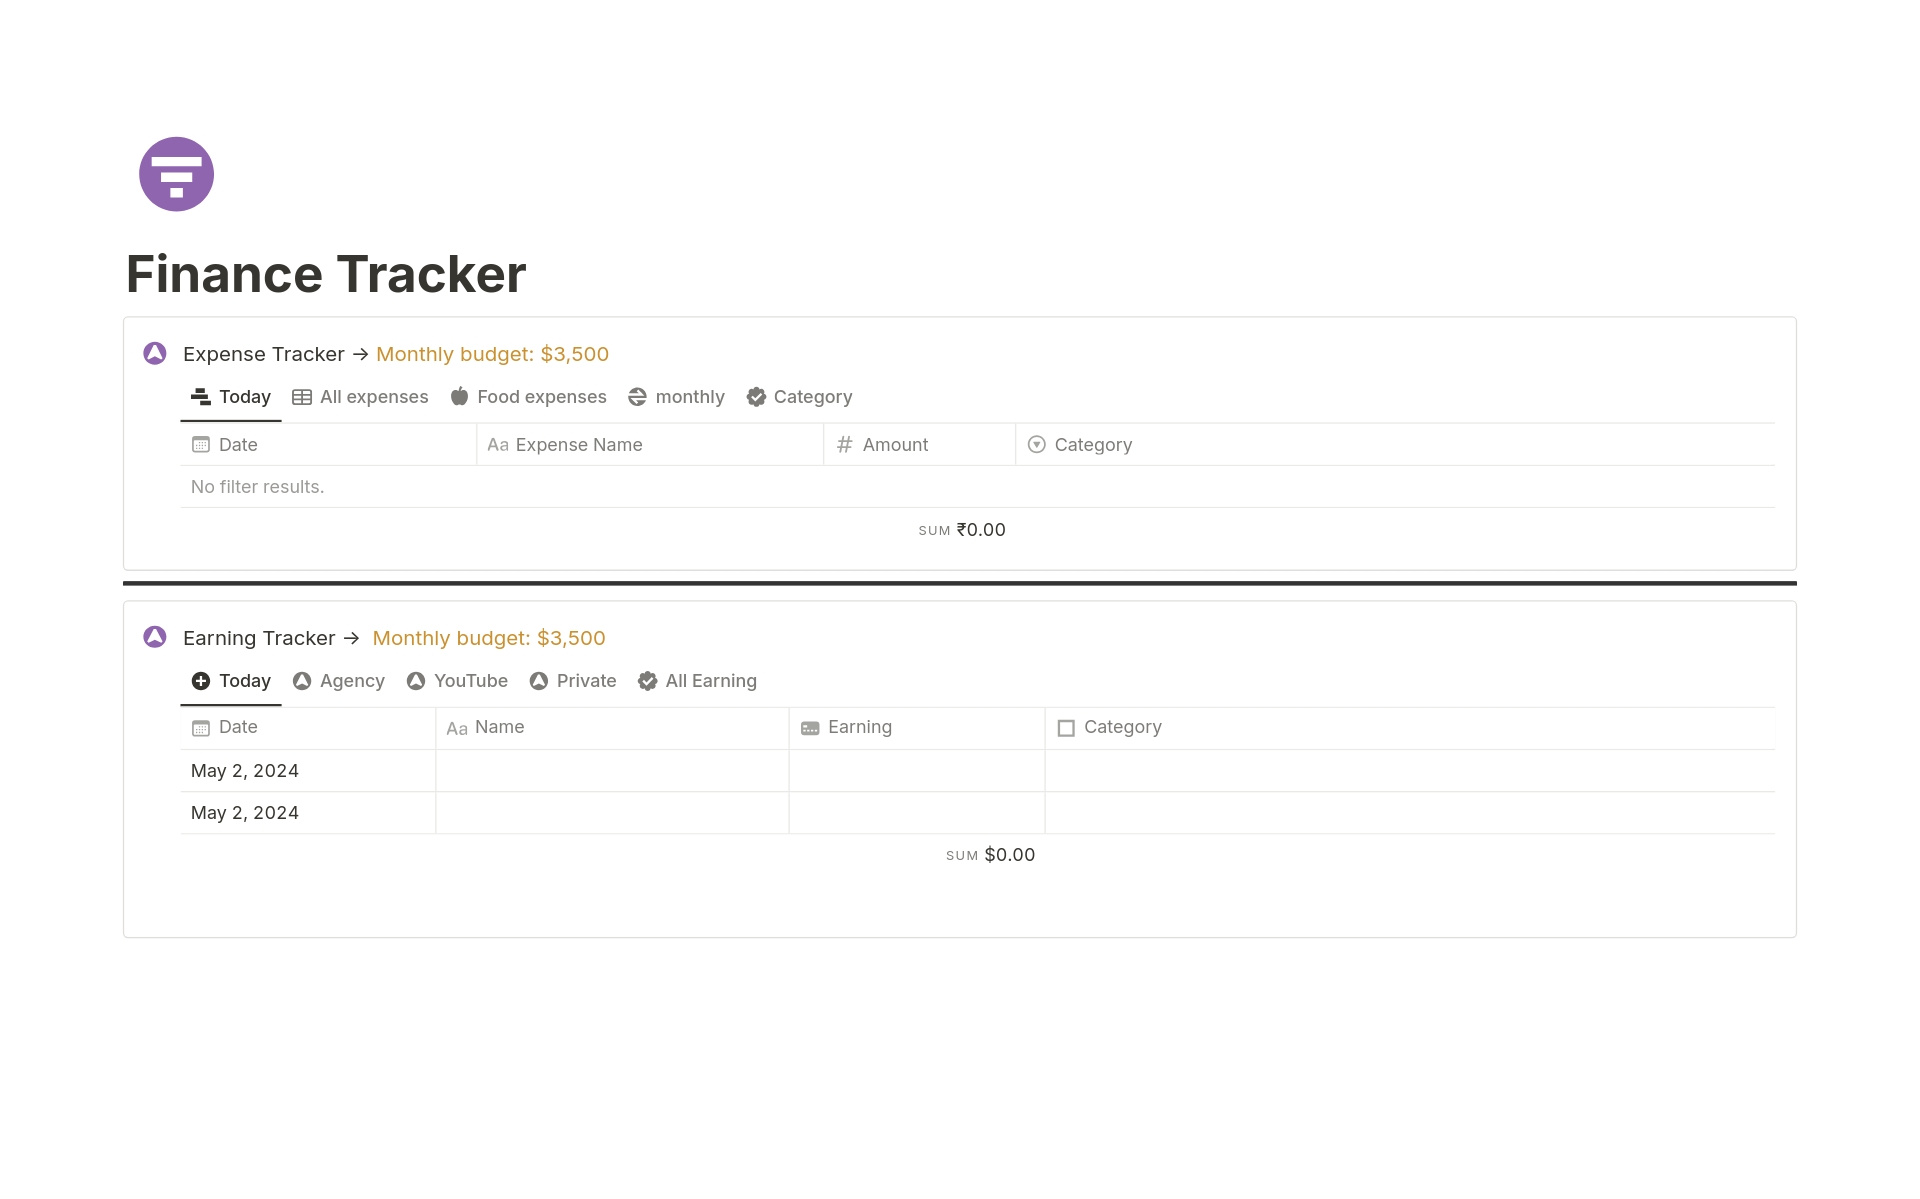 Vista previa de una plantilla para Full Finance Tracker Separately 